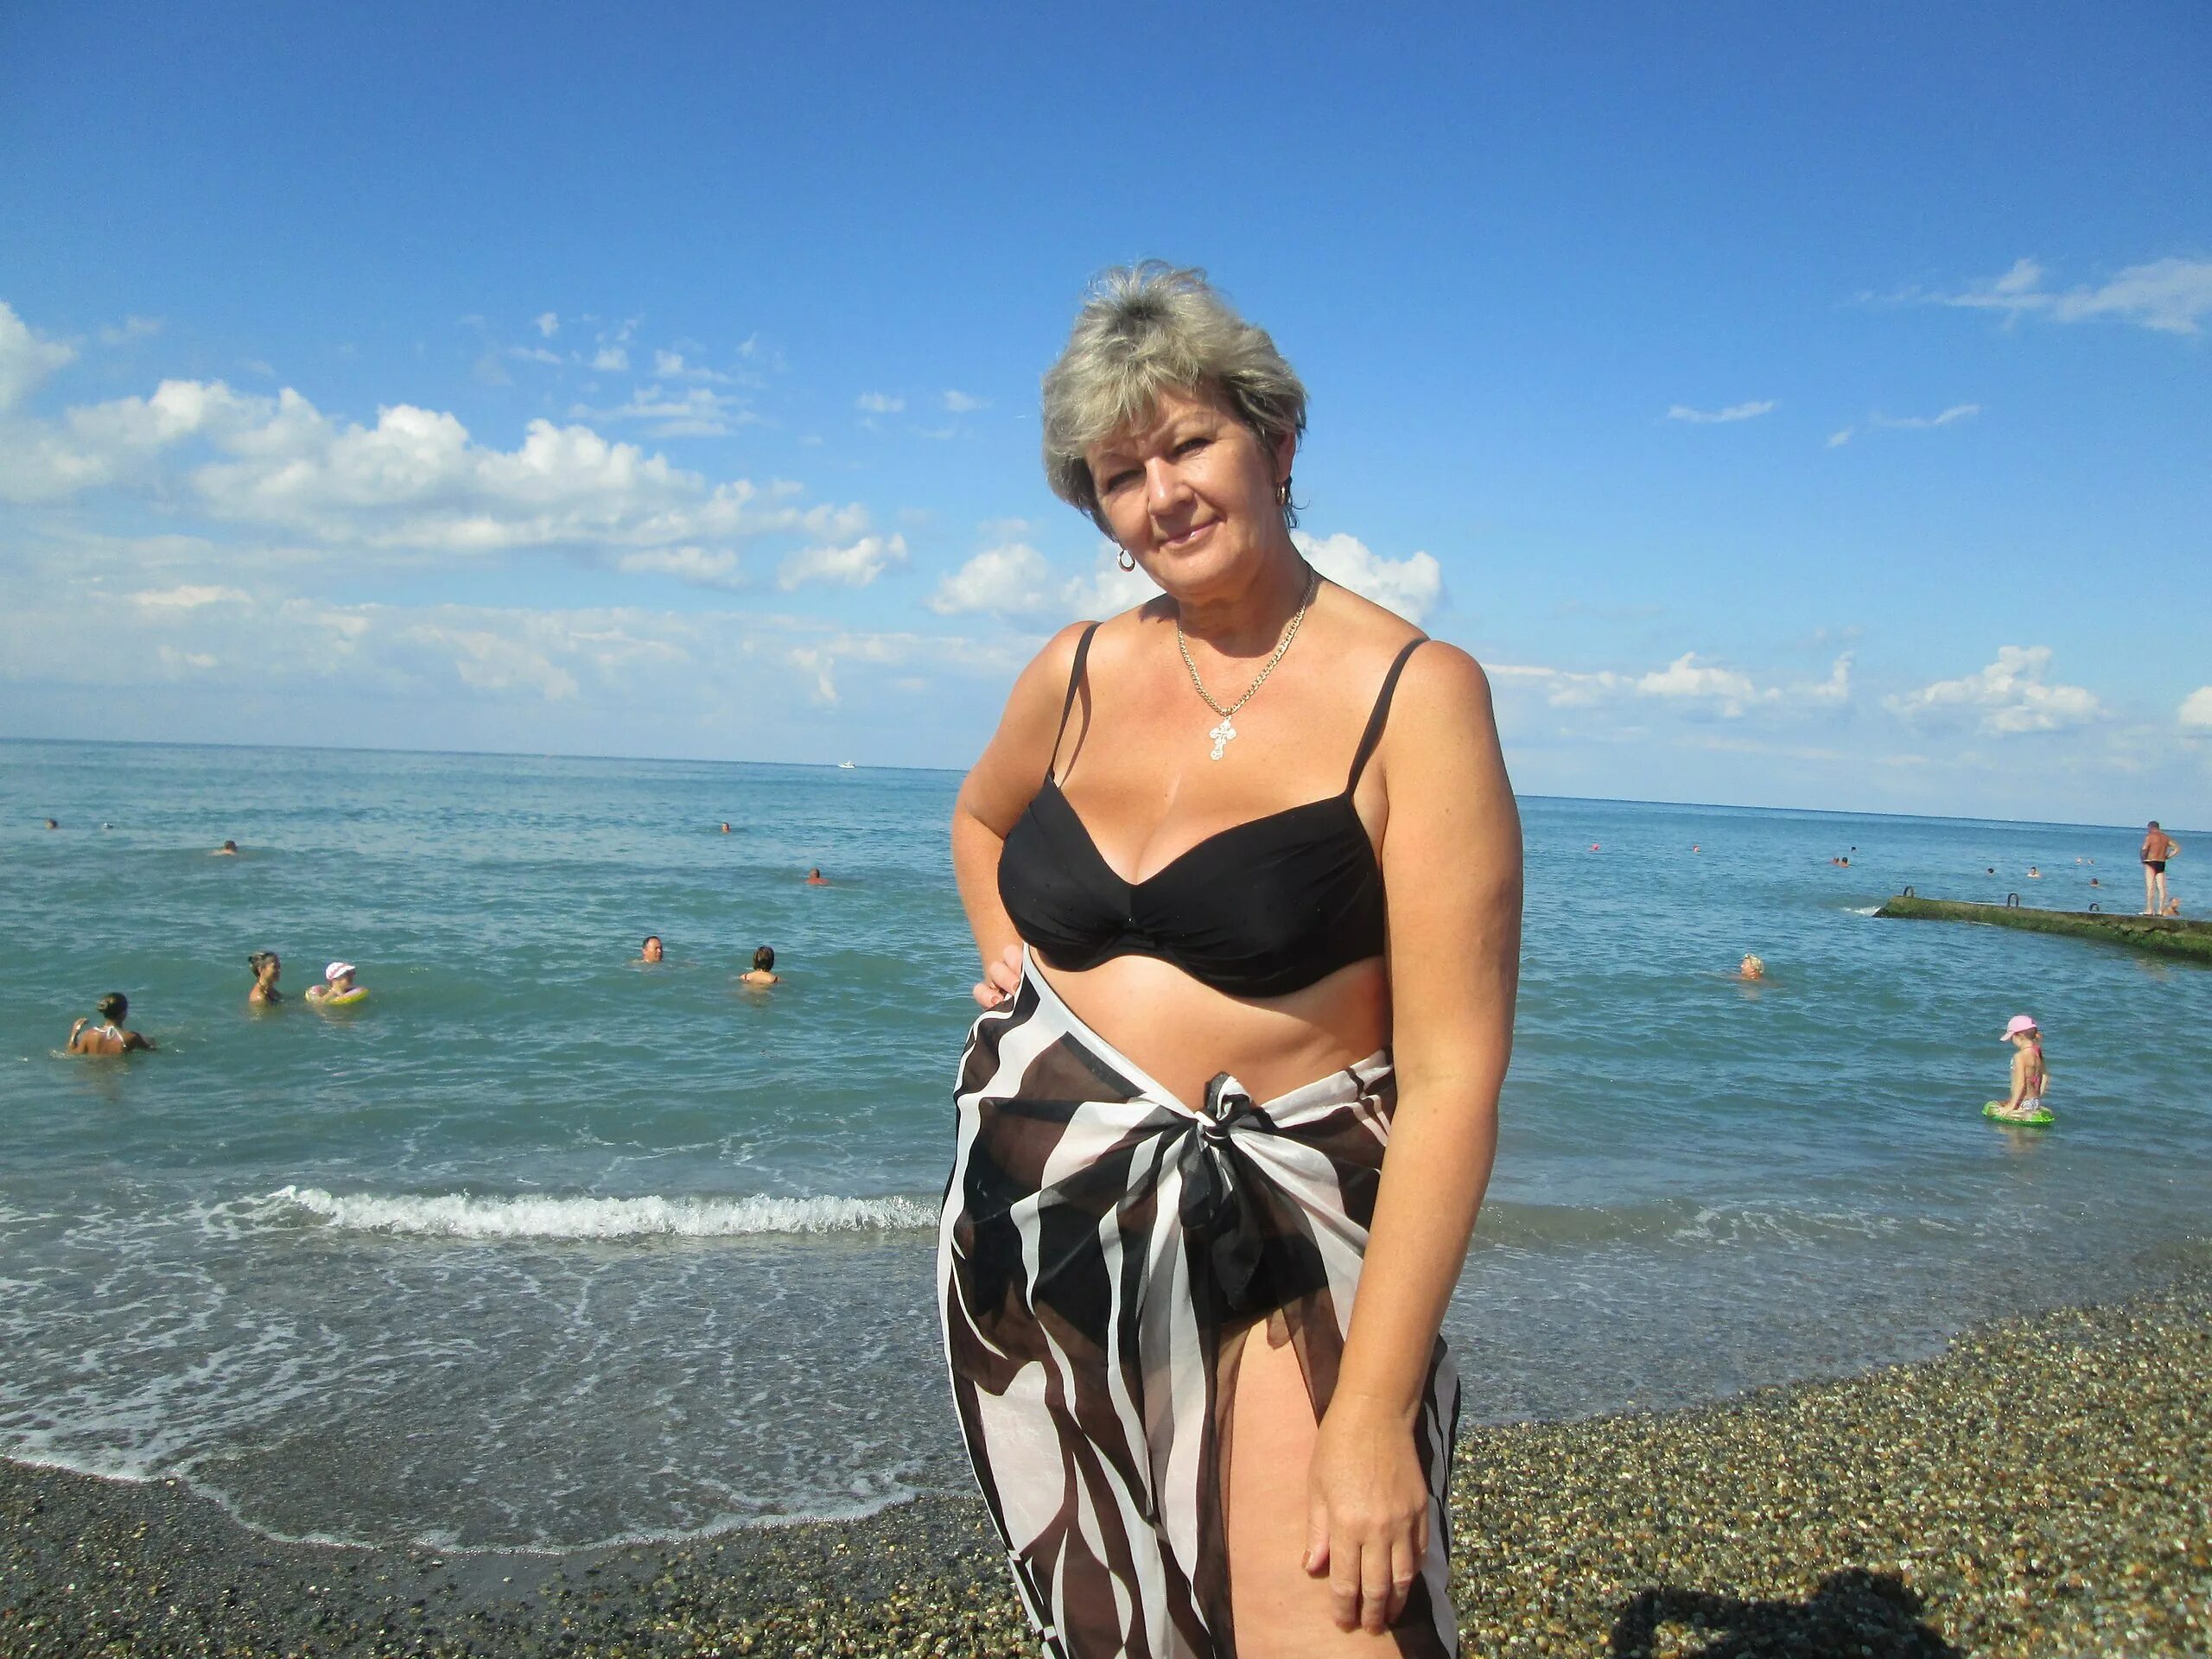 Тетеньки 50. Женщина в возрасте на море. Русские женщины 50 лет. Русские женщины в возрасте на море. Взрослые женщины на отдыхе.